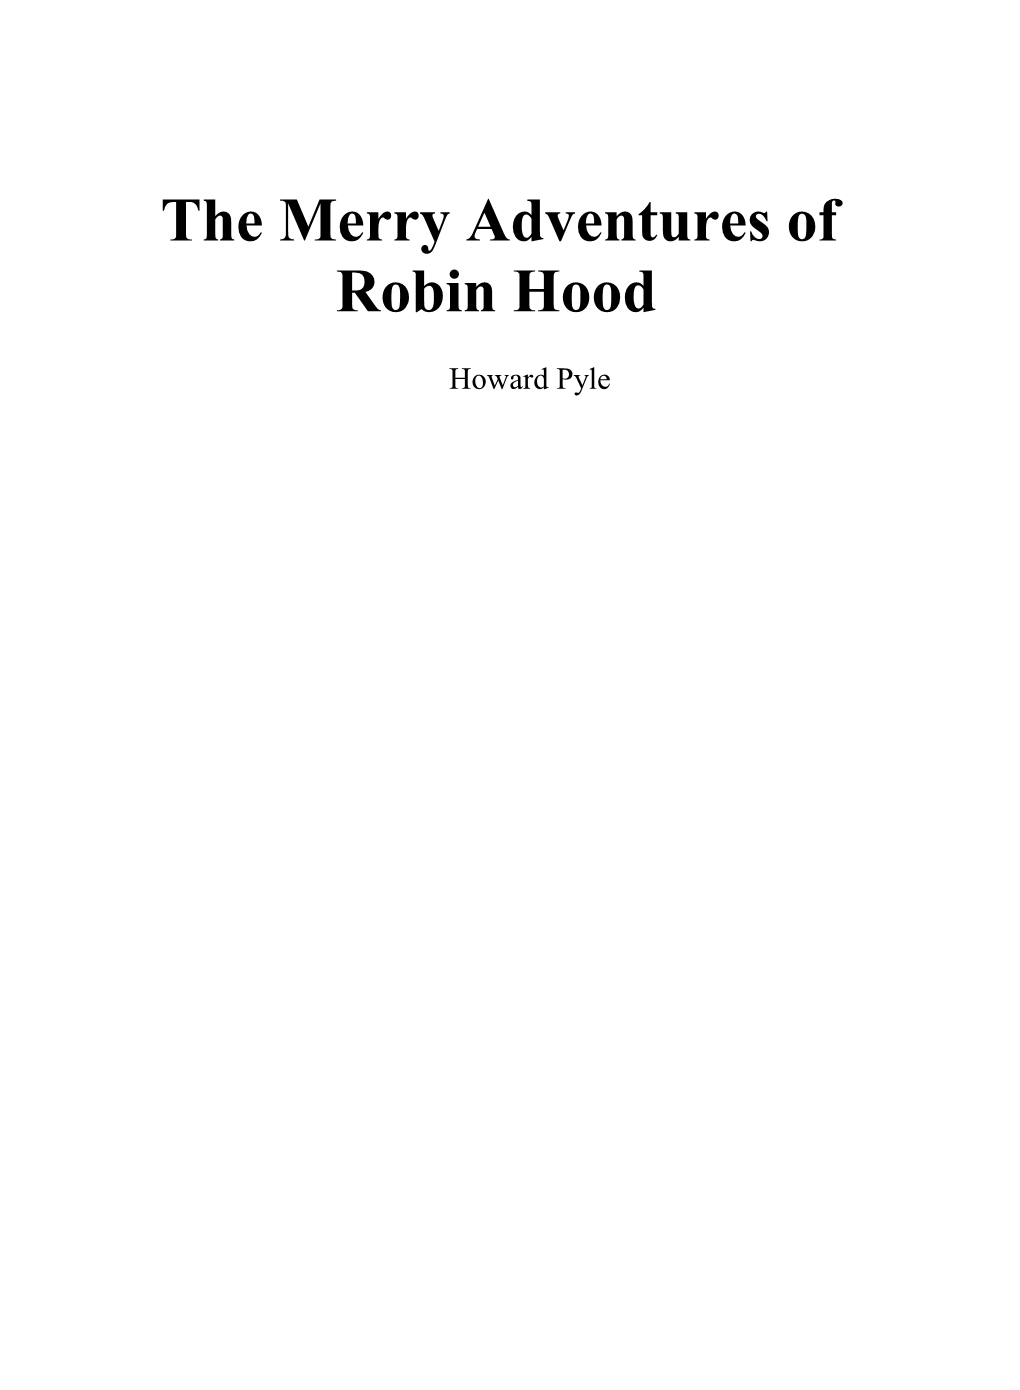 The Merry Adventures Of